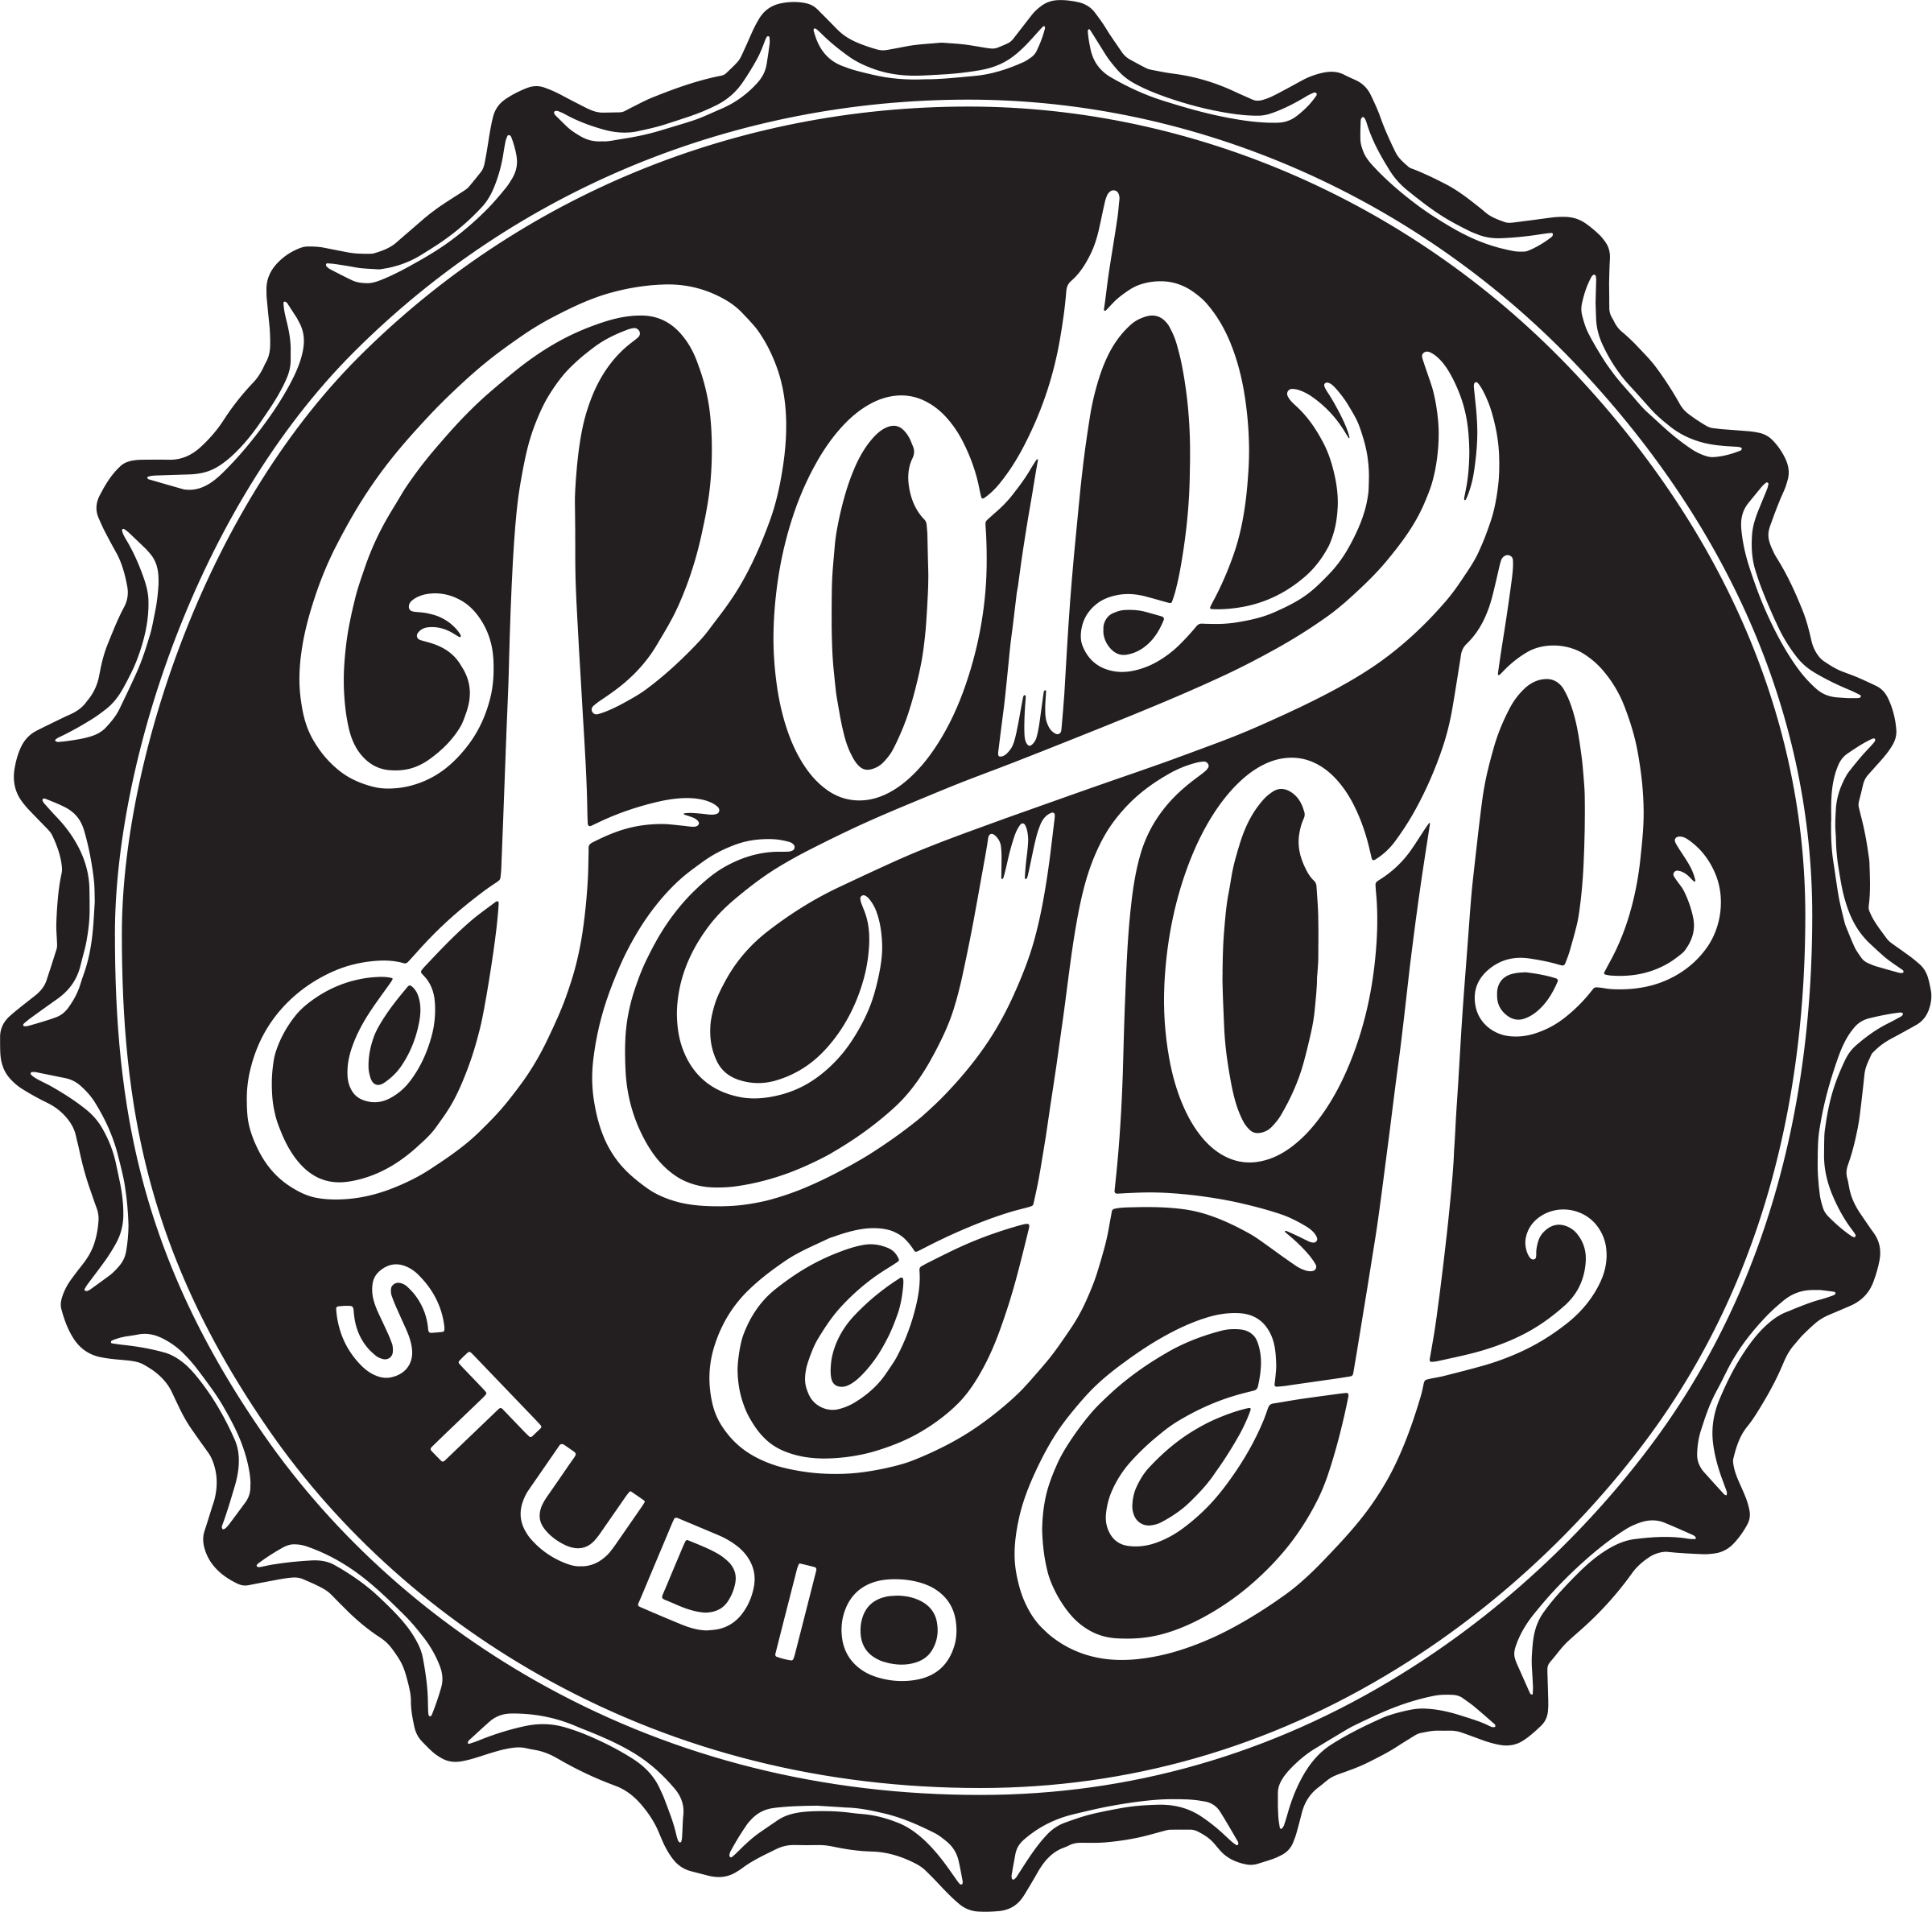 PopTop Studio, LLC